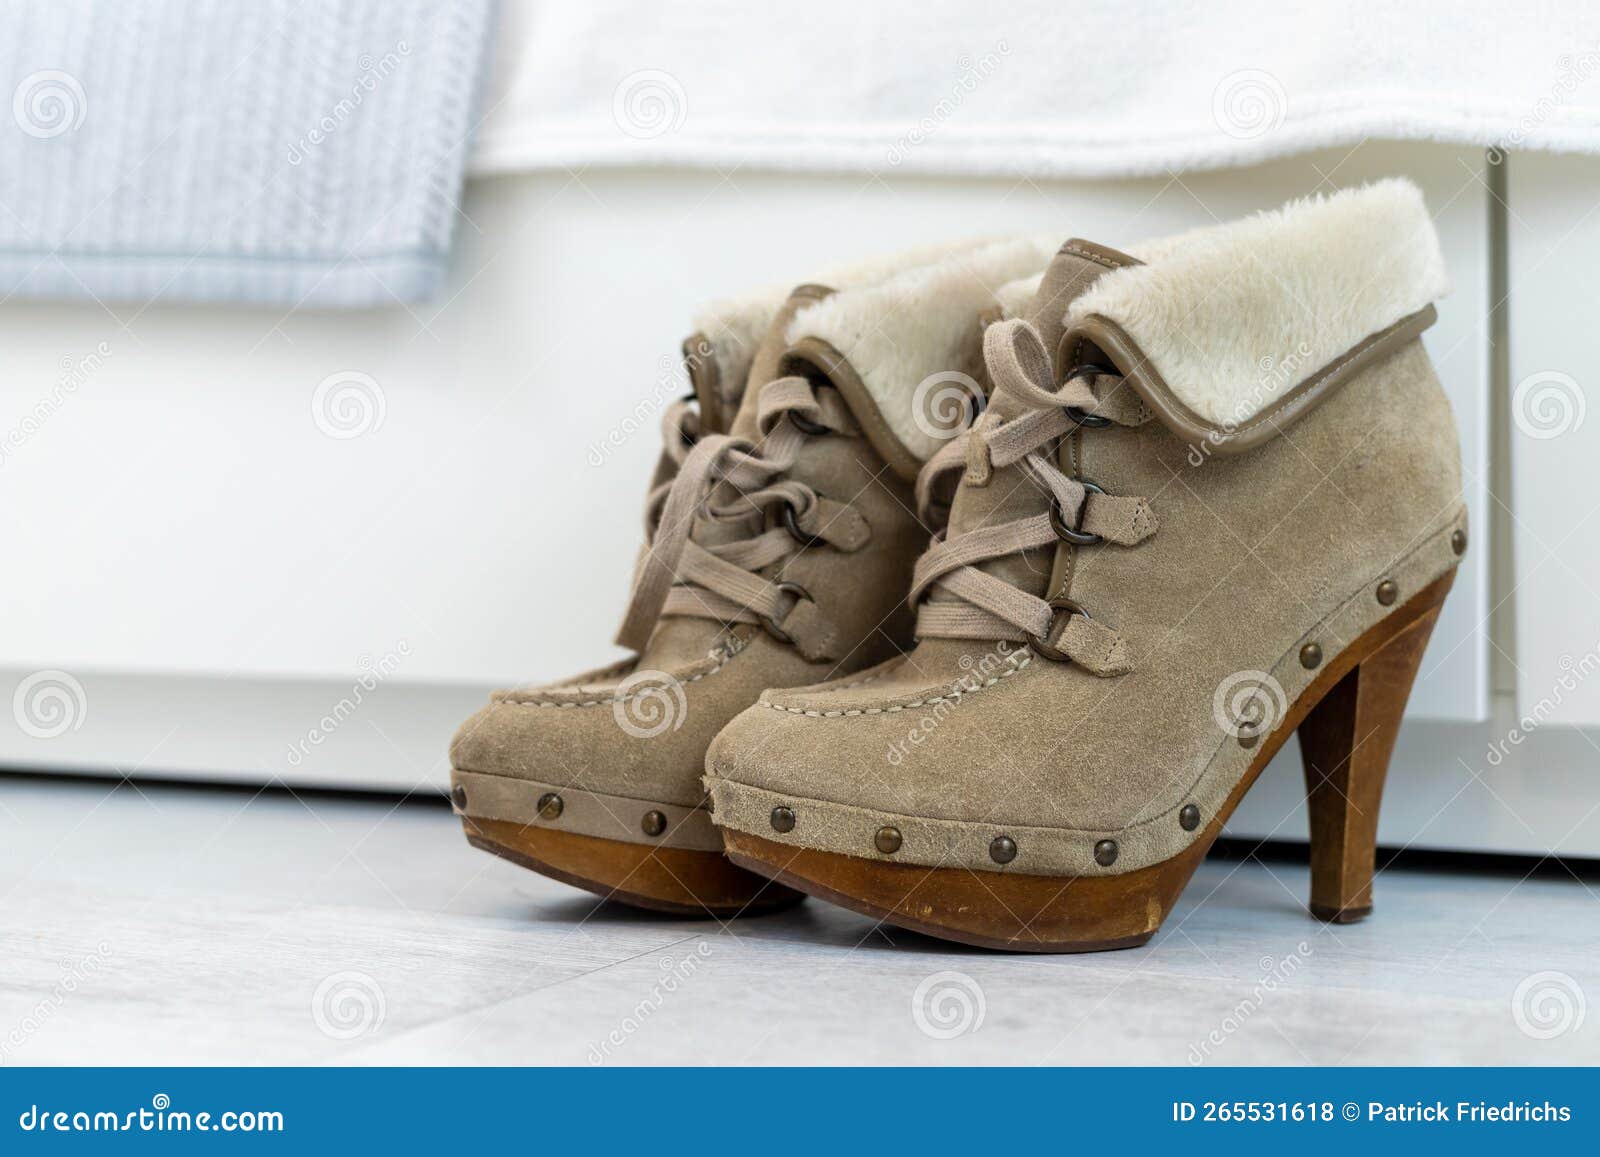 aeProduct.getSubject() | Heels, Womens high heels, Platform high heels